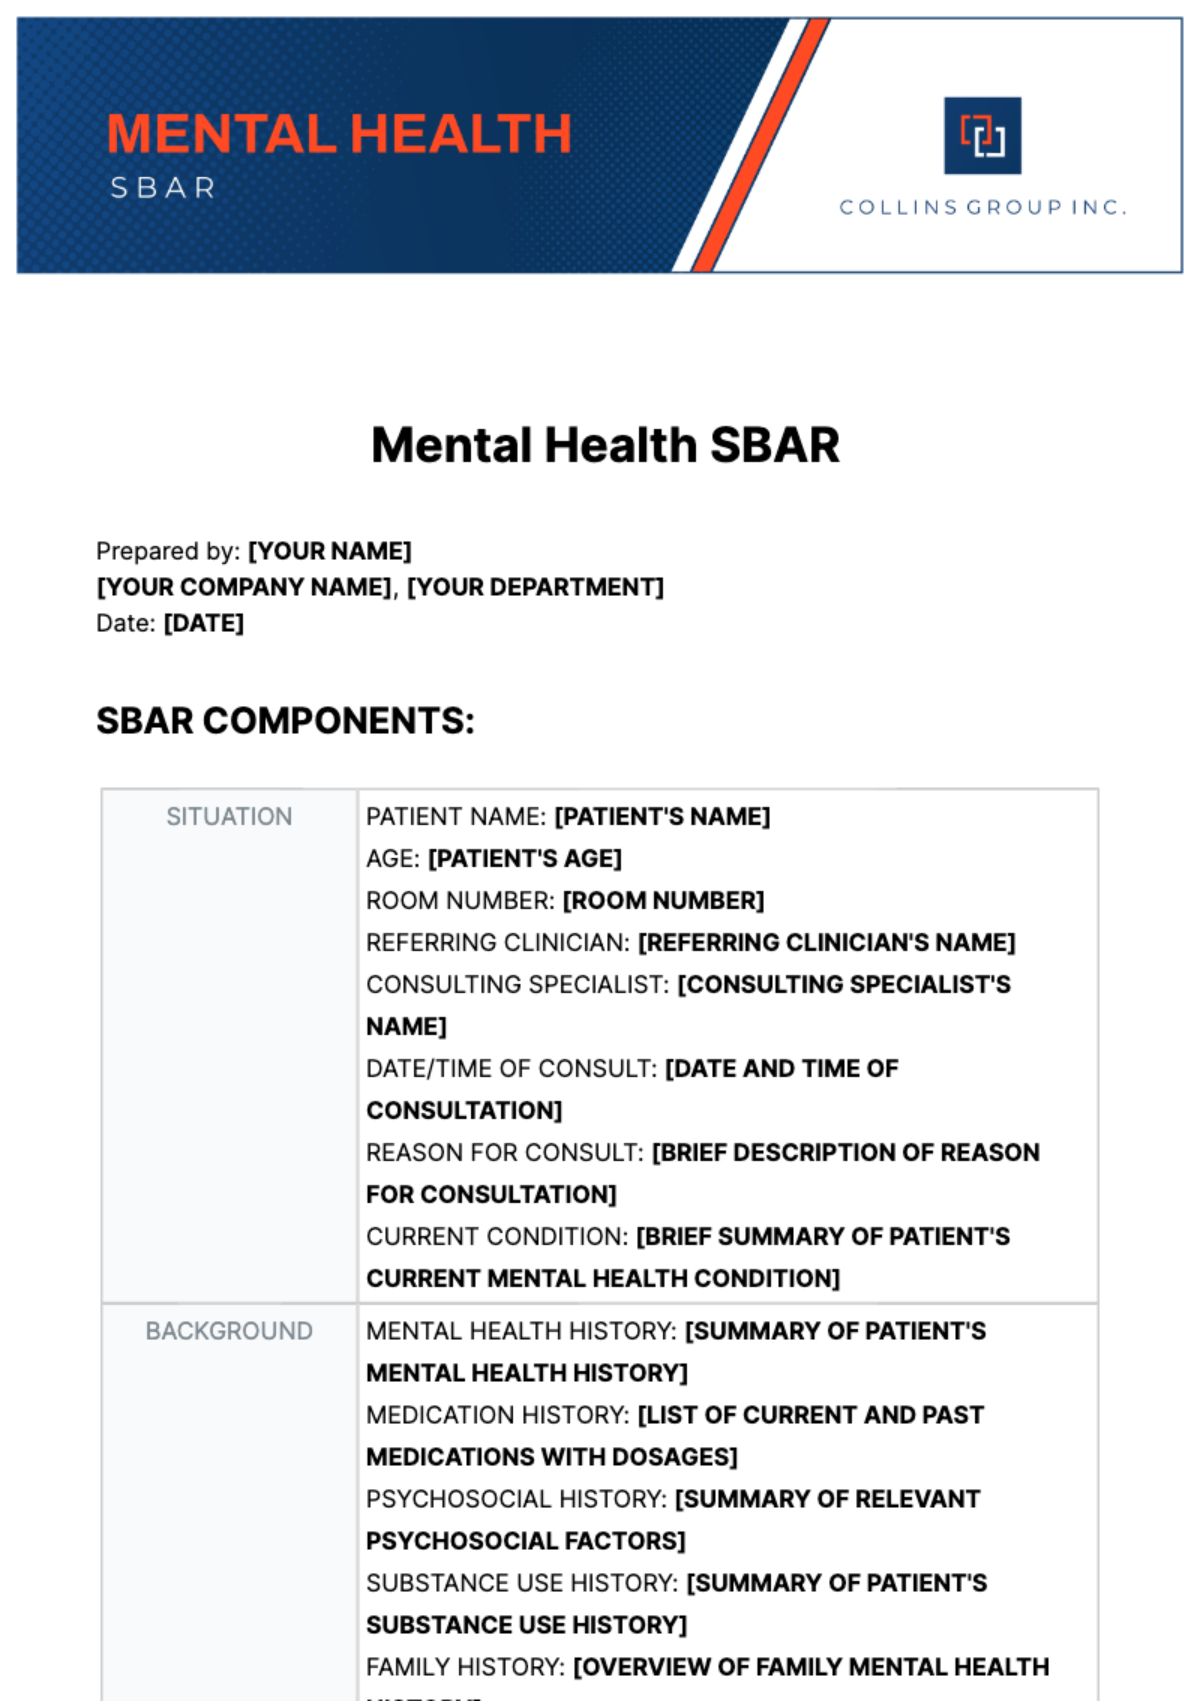 Mental Health SBAR Template